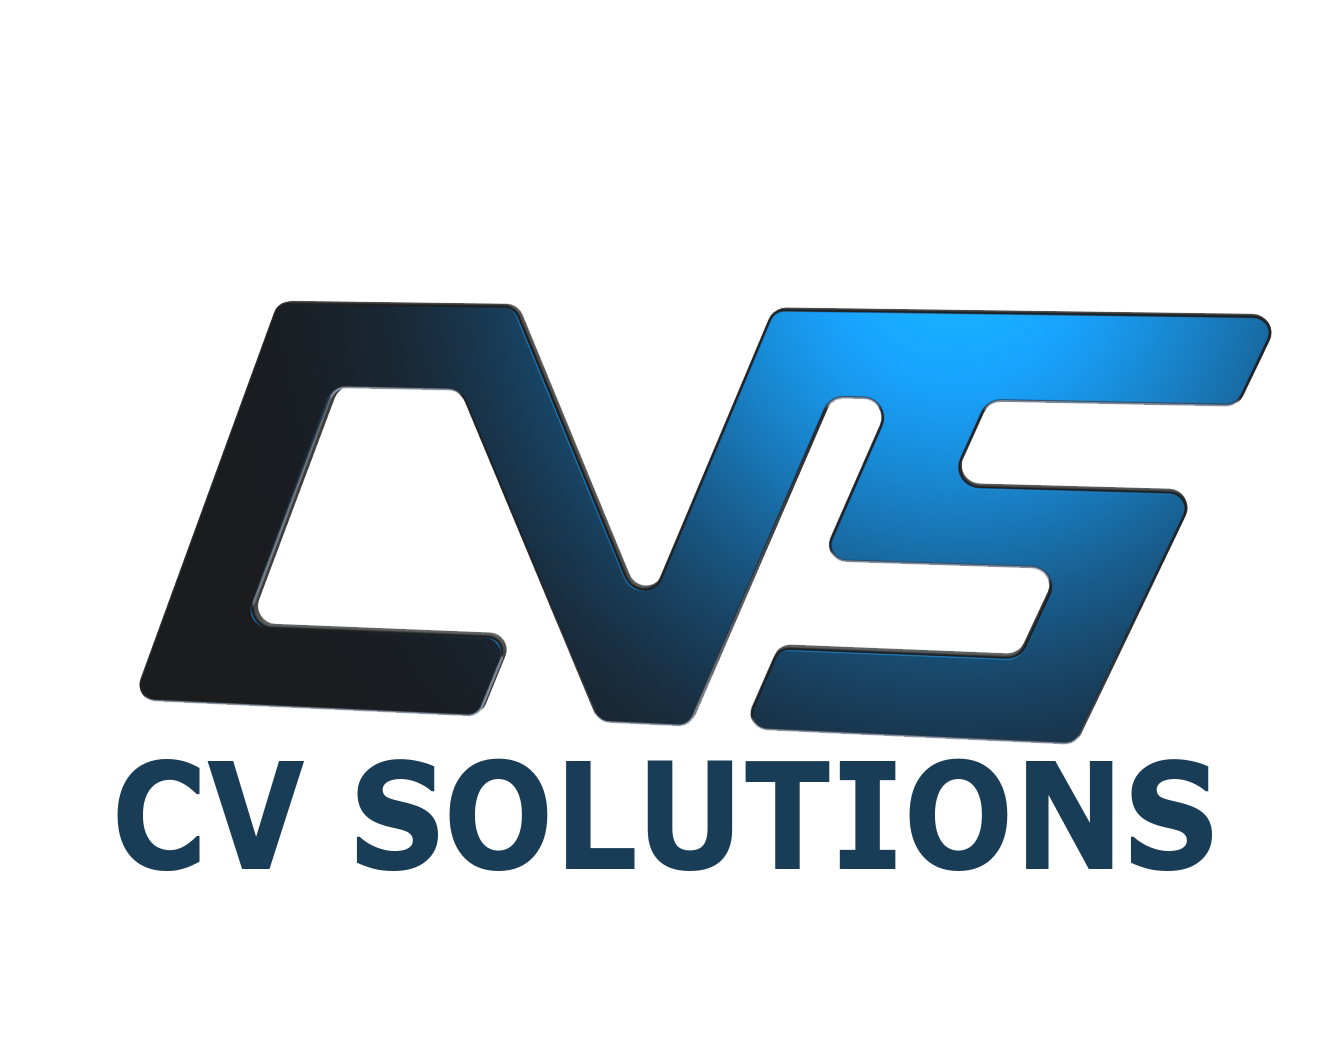 CVS Solutions